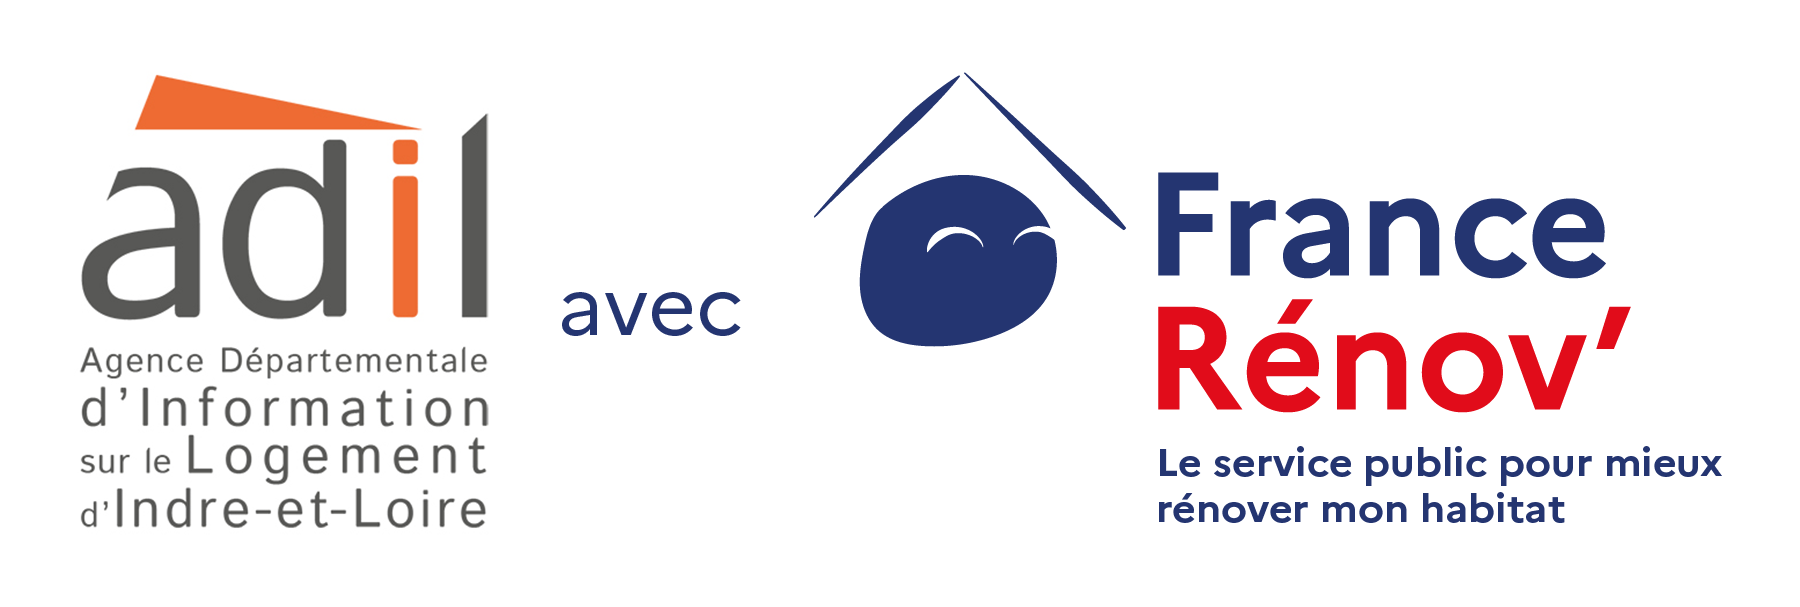 Logo ADIL France Rénov' Touraine